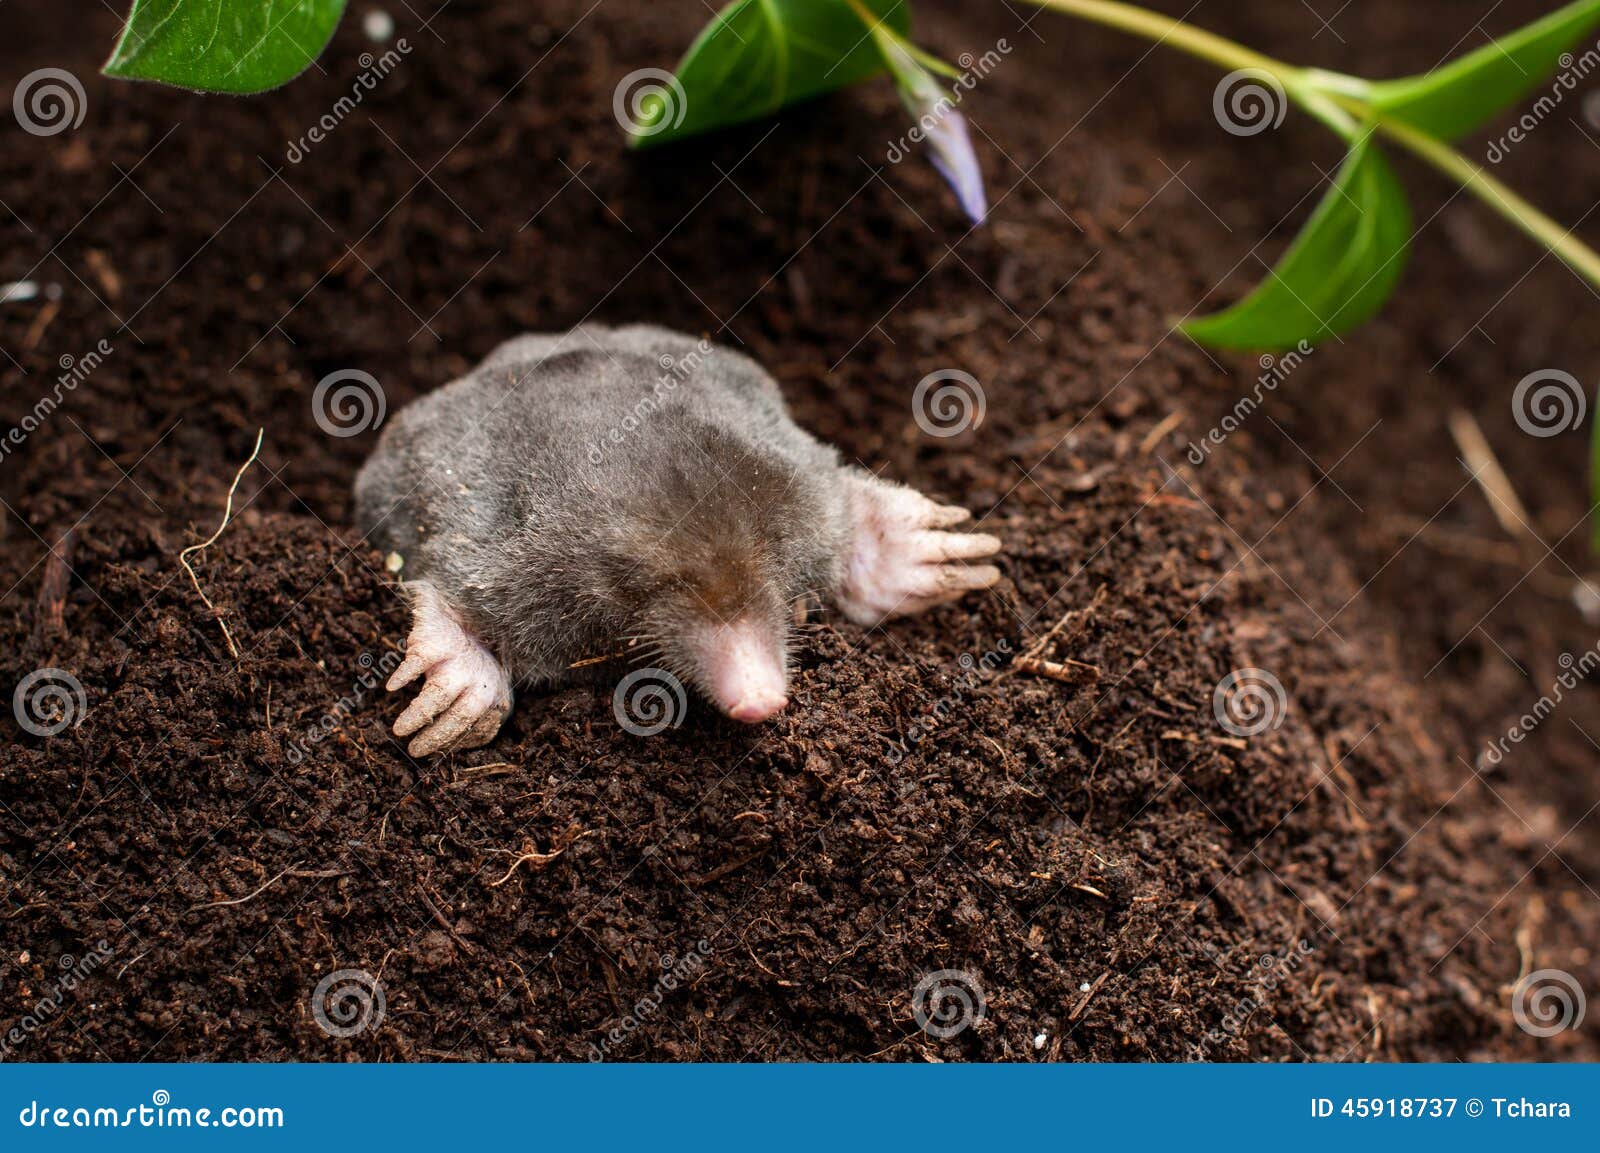 mole in the soil hol